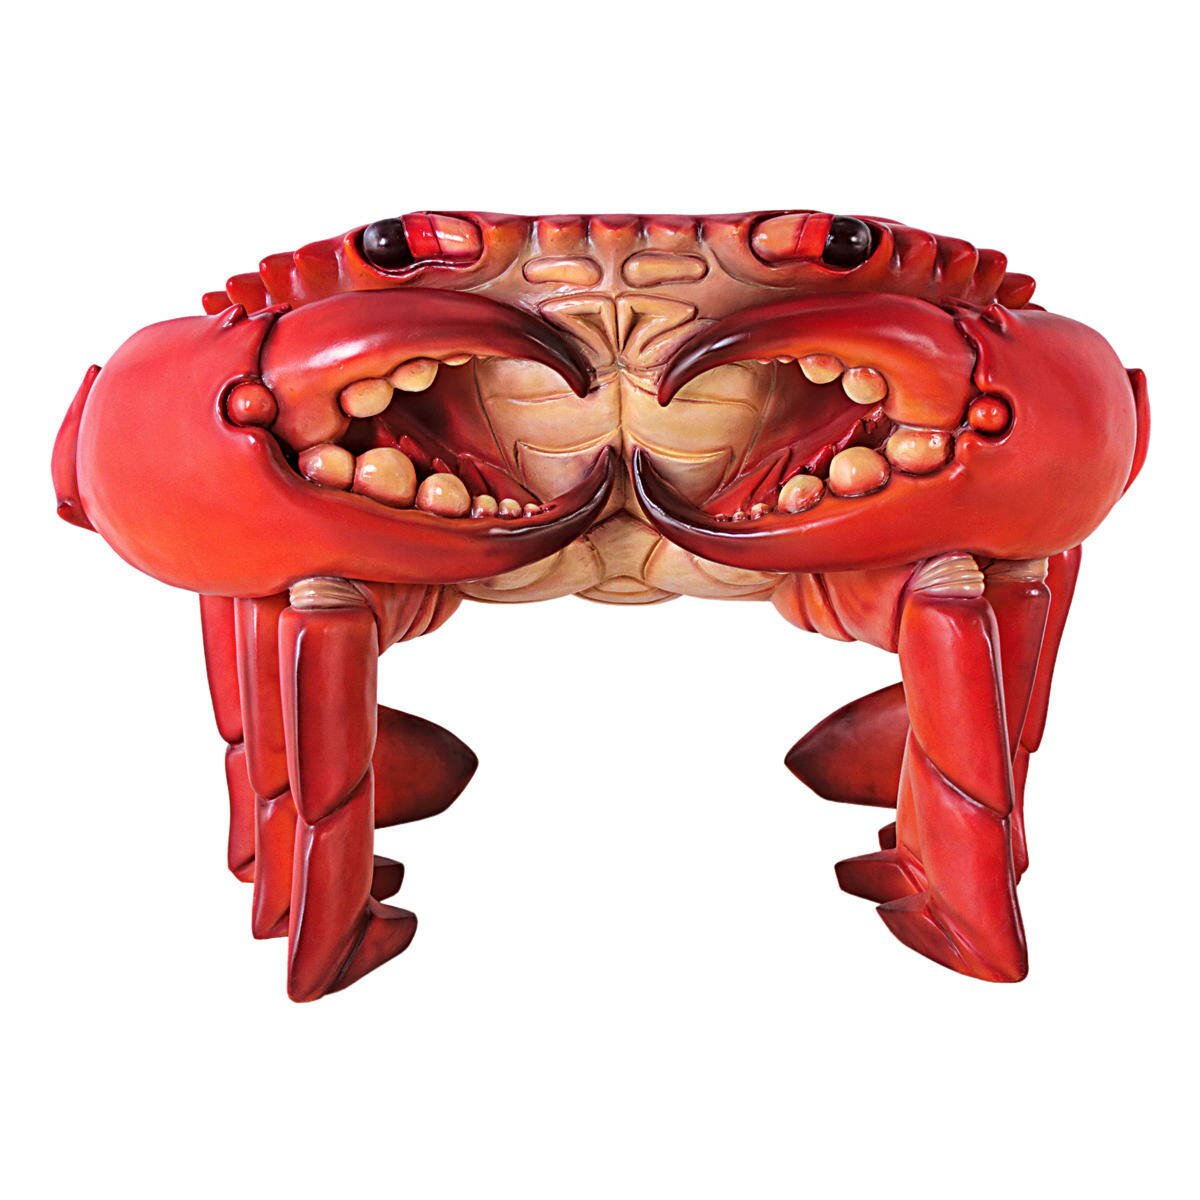 Giant King Crab Lounge Chair - Weird crab chair